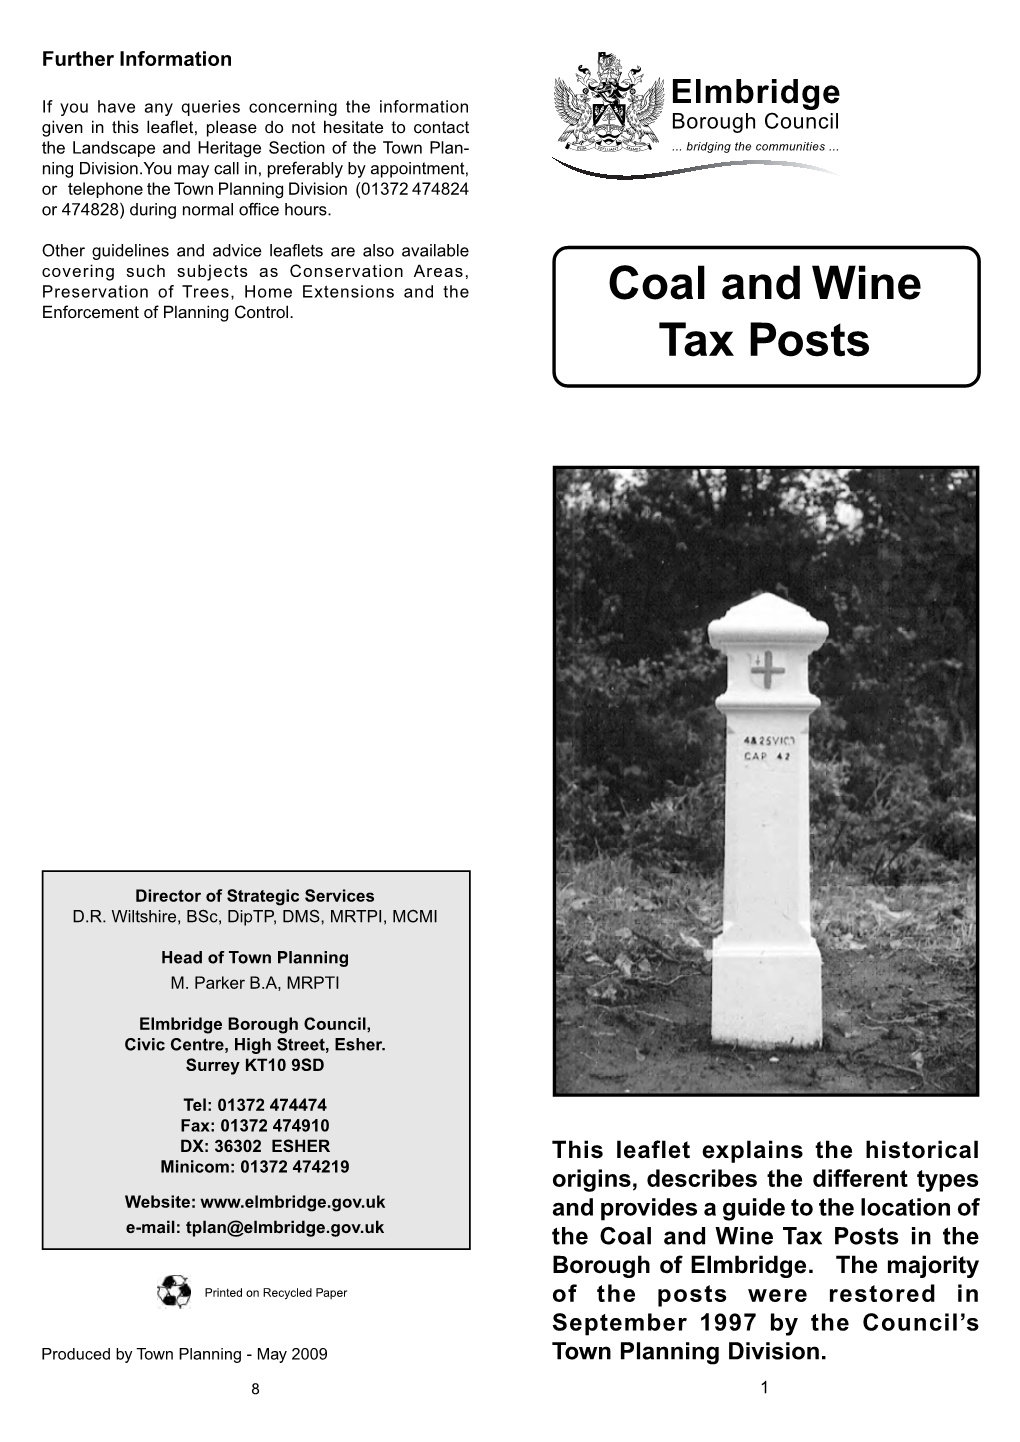 Coal and Wine Tax Posts in the Borough of Elmbridge